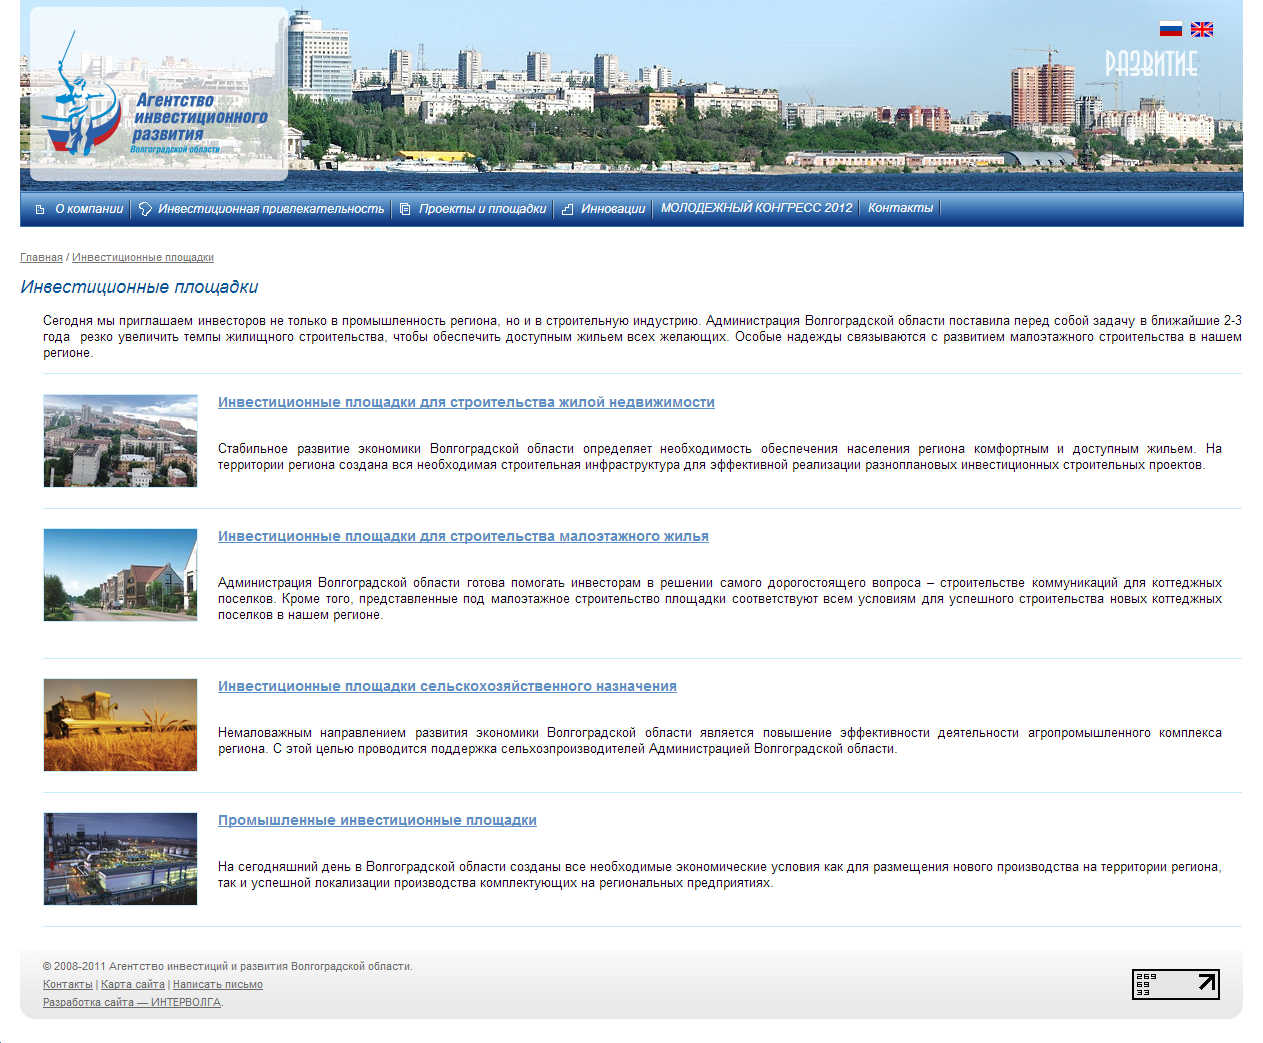 агентство инвестиций и развития волгоградской области